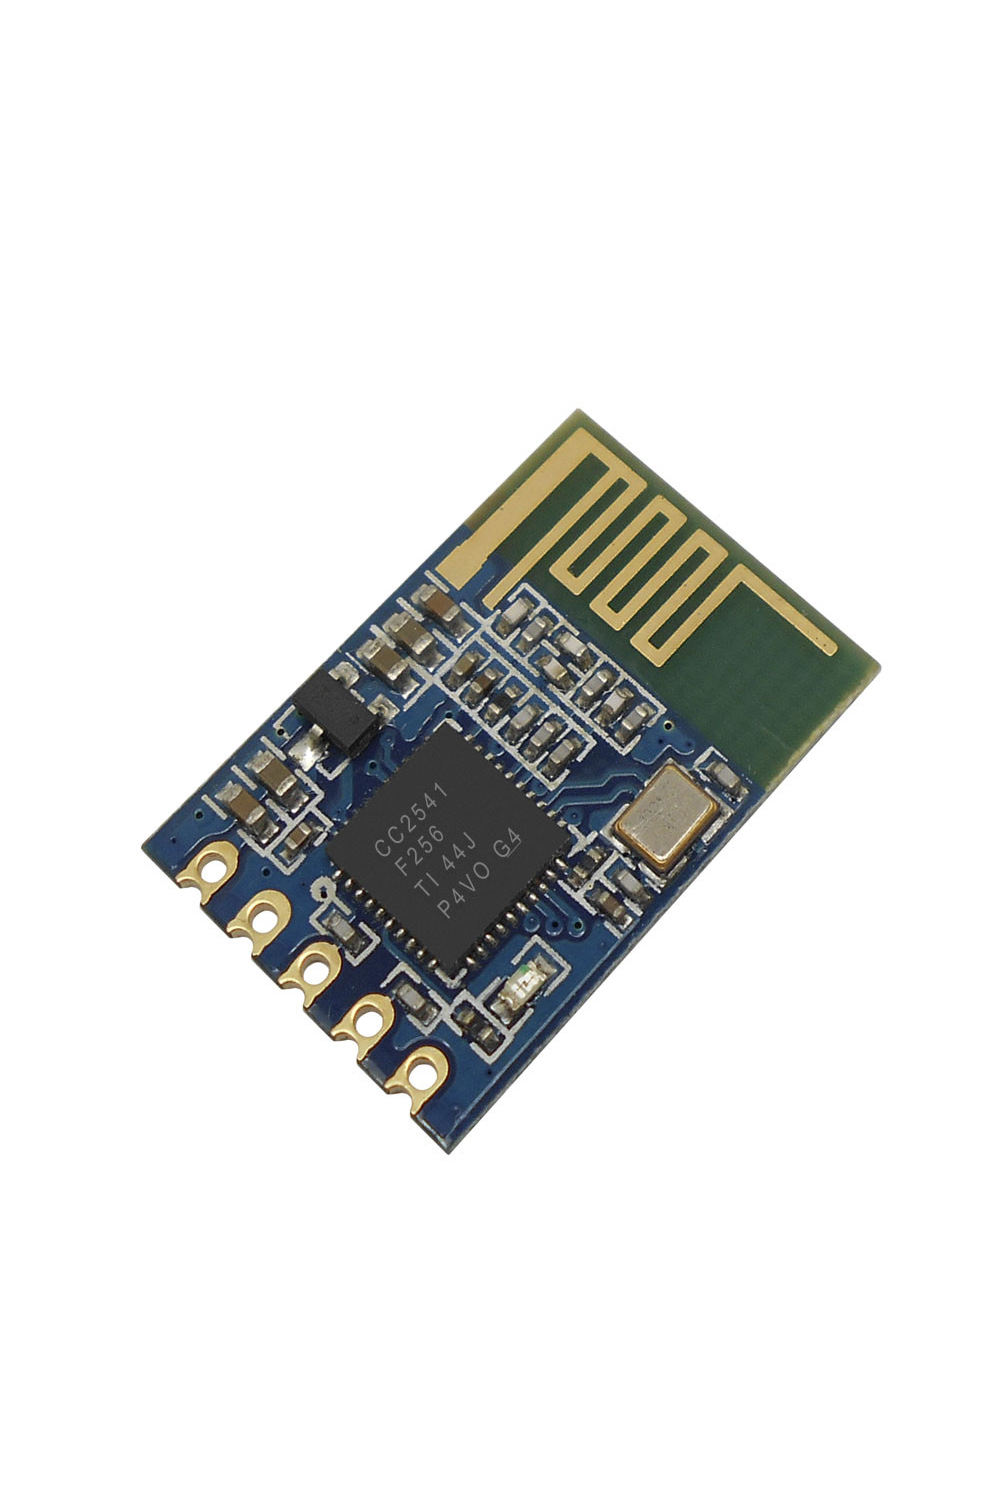 RF2541 : BLE 4.0 UART BLE Module  Adopts CC2541 SOC Chip 